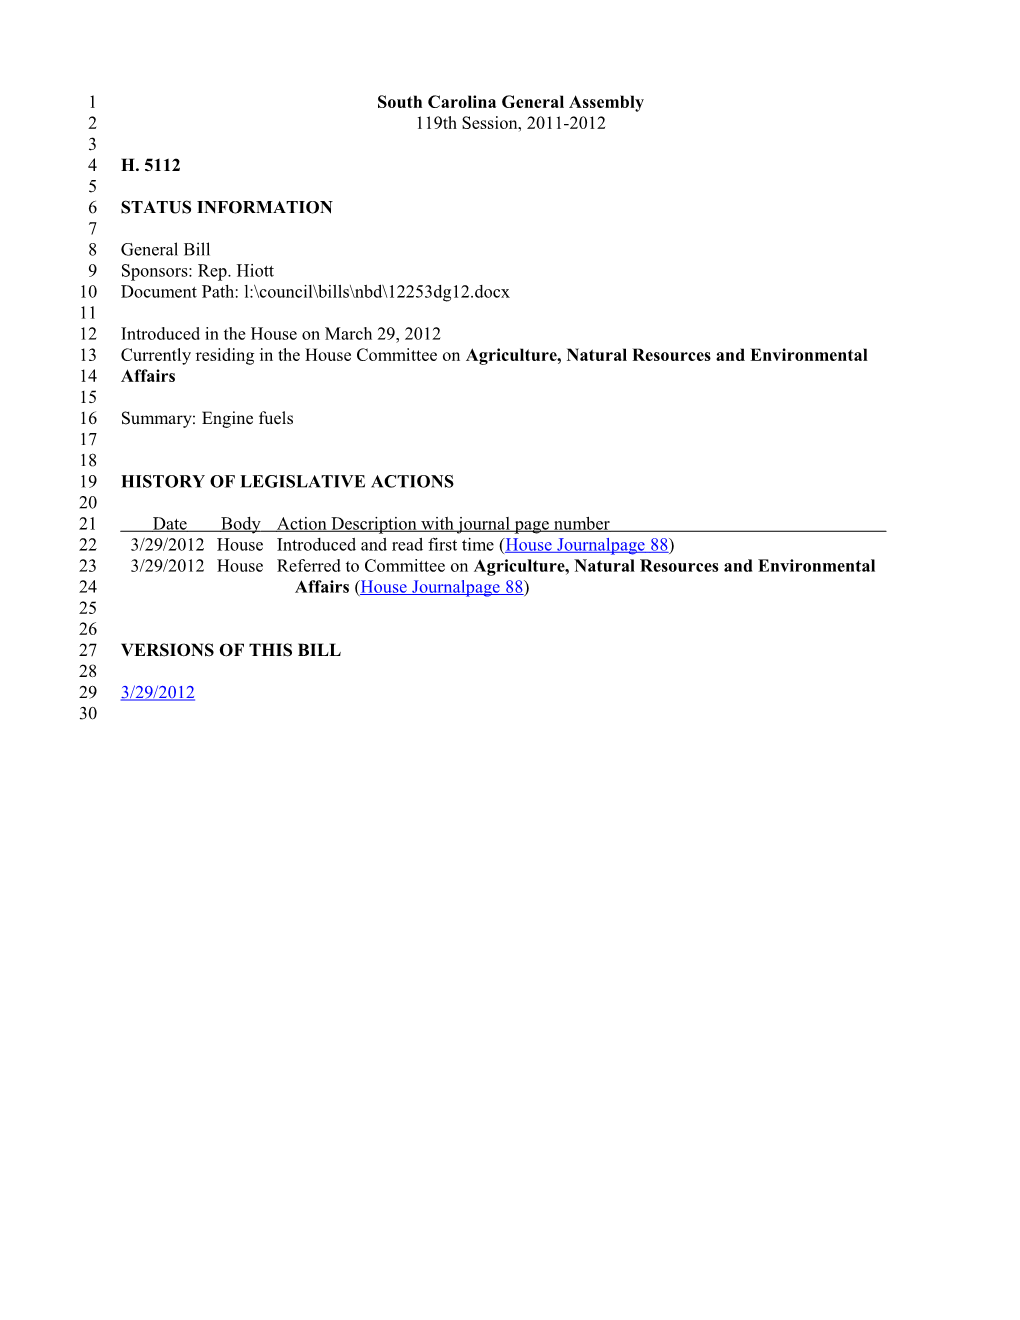 2011-2012 Bill 5112: Engine Fuels - South Carolina Legislature Online